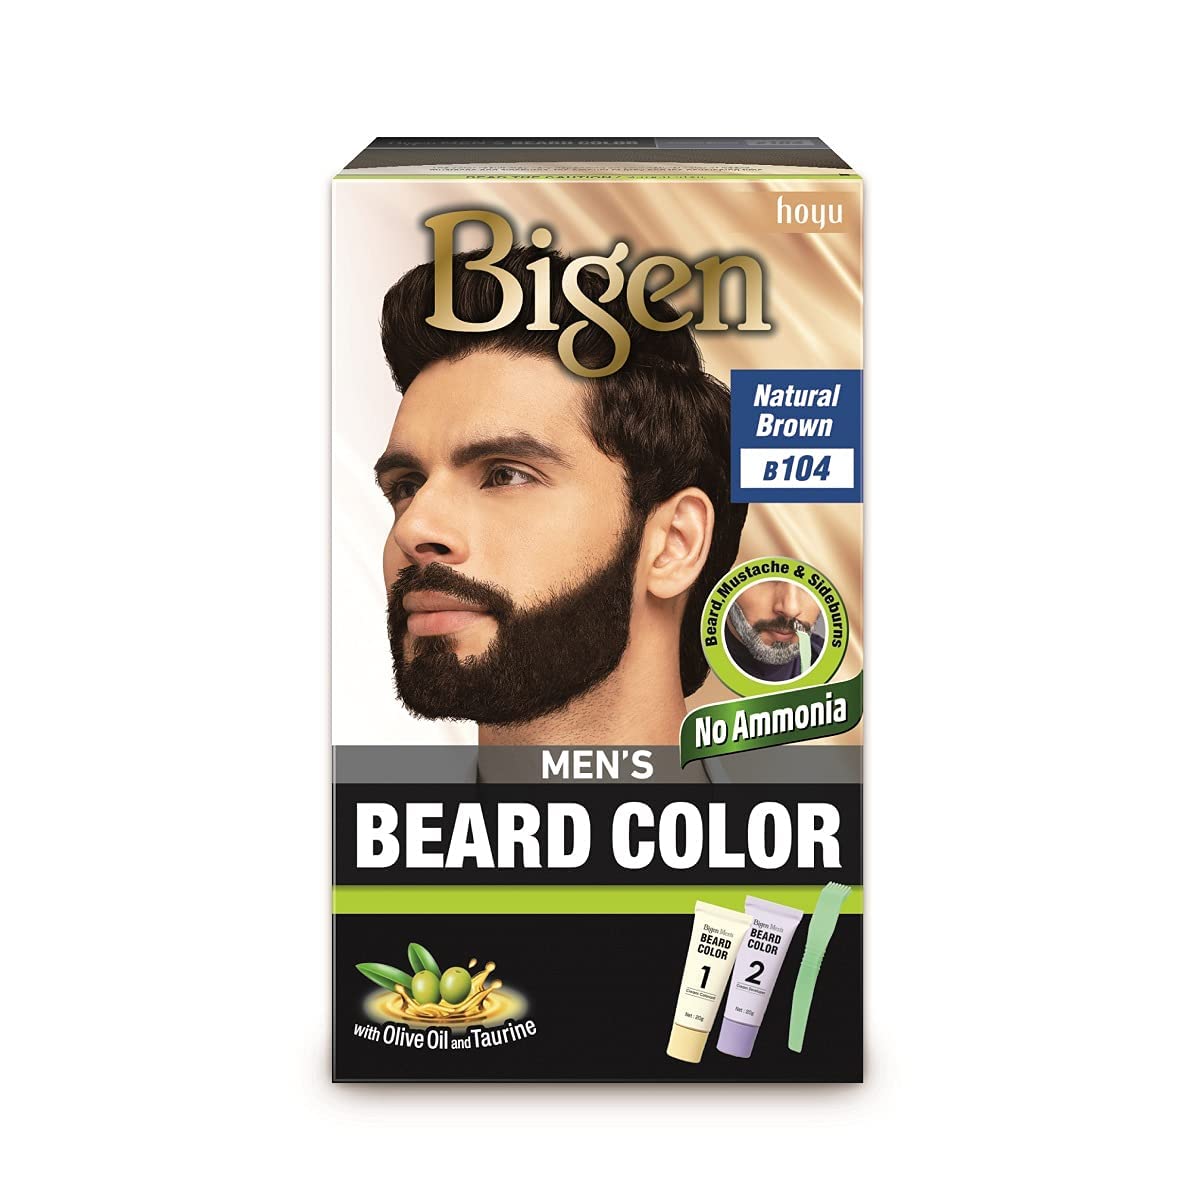 Bigen Men's Beard Color Natural Brown (B104)